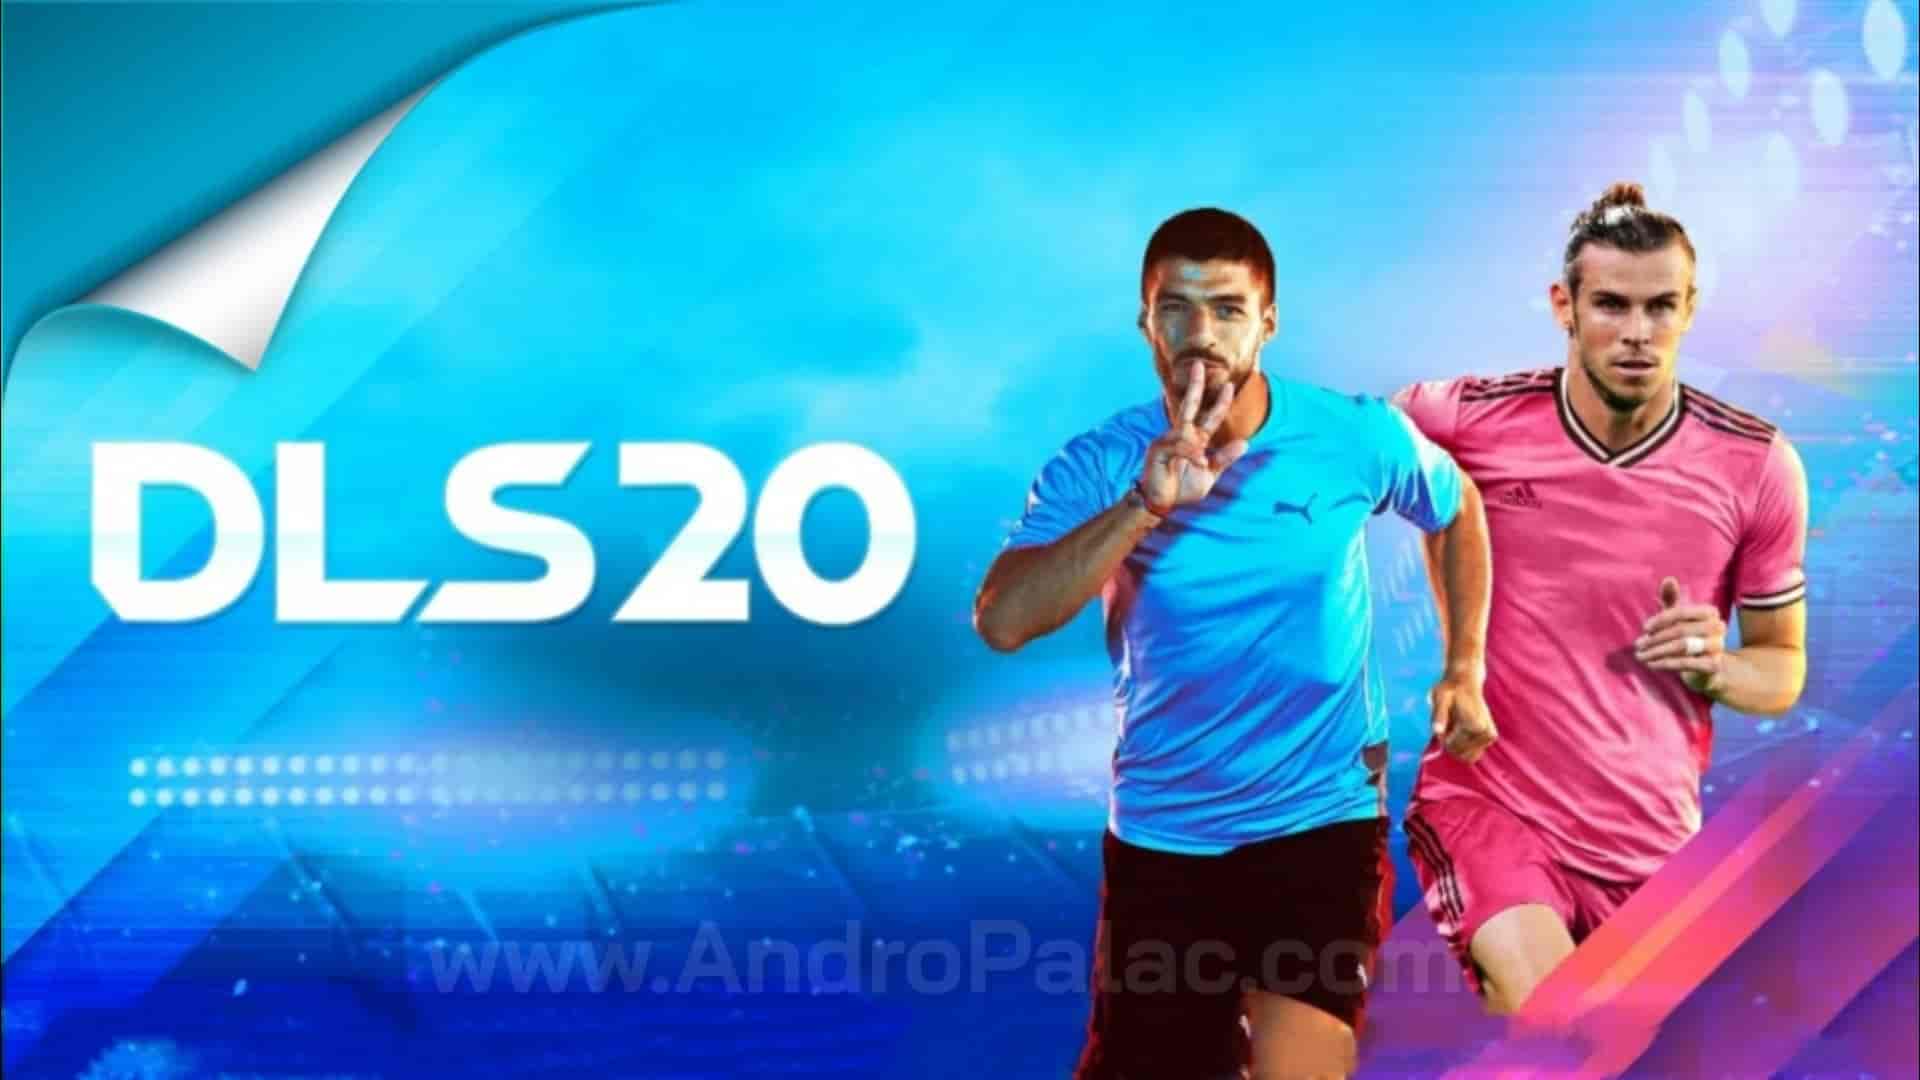 Dream League Soccer 2020 APK, DLS 2020 APK, Dream League Soccer 2020 Mod APK